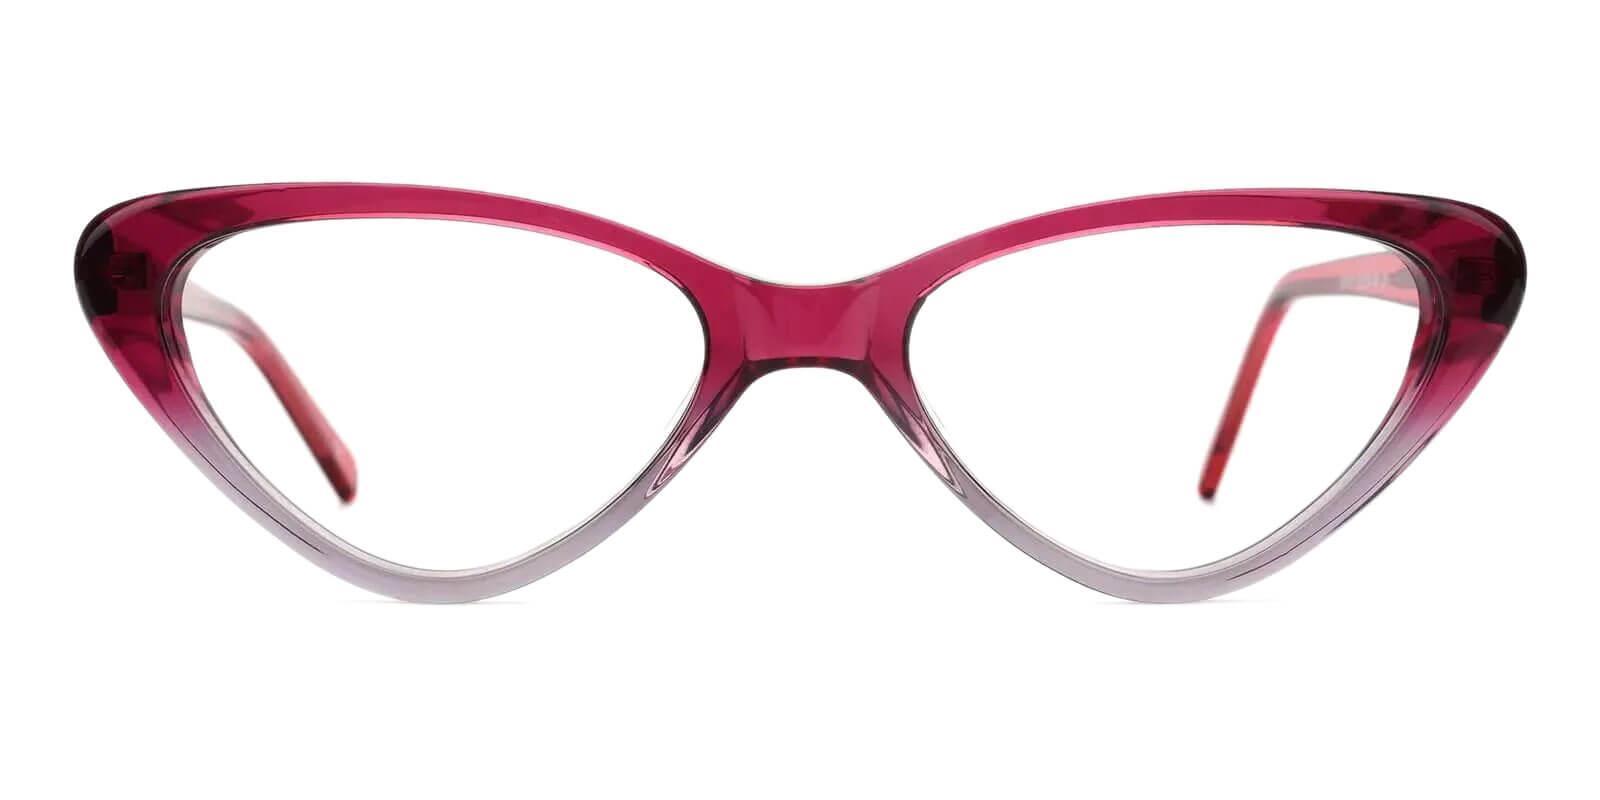 Selina Purple Acetate Eyeglasses , SpringHinges , UniversalBridgeFit Frames from ABBE Glasses